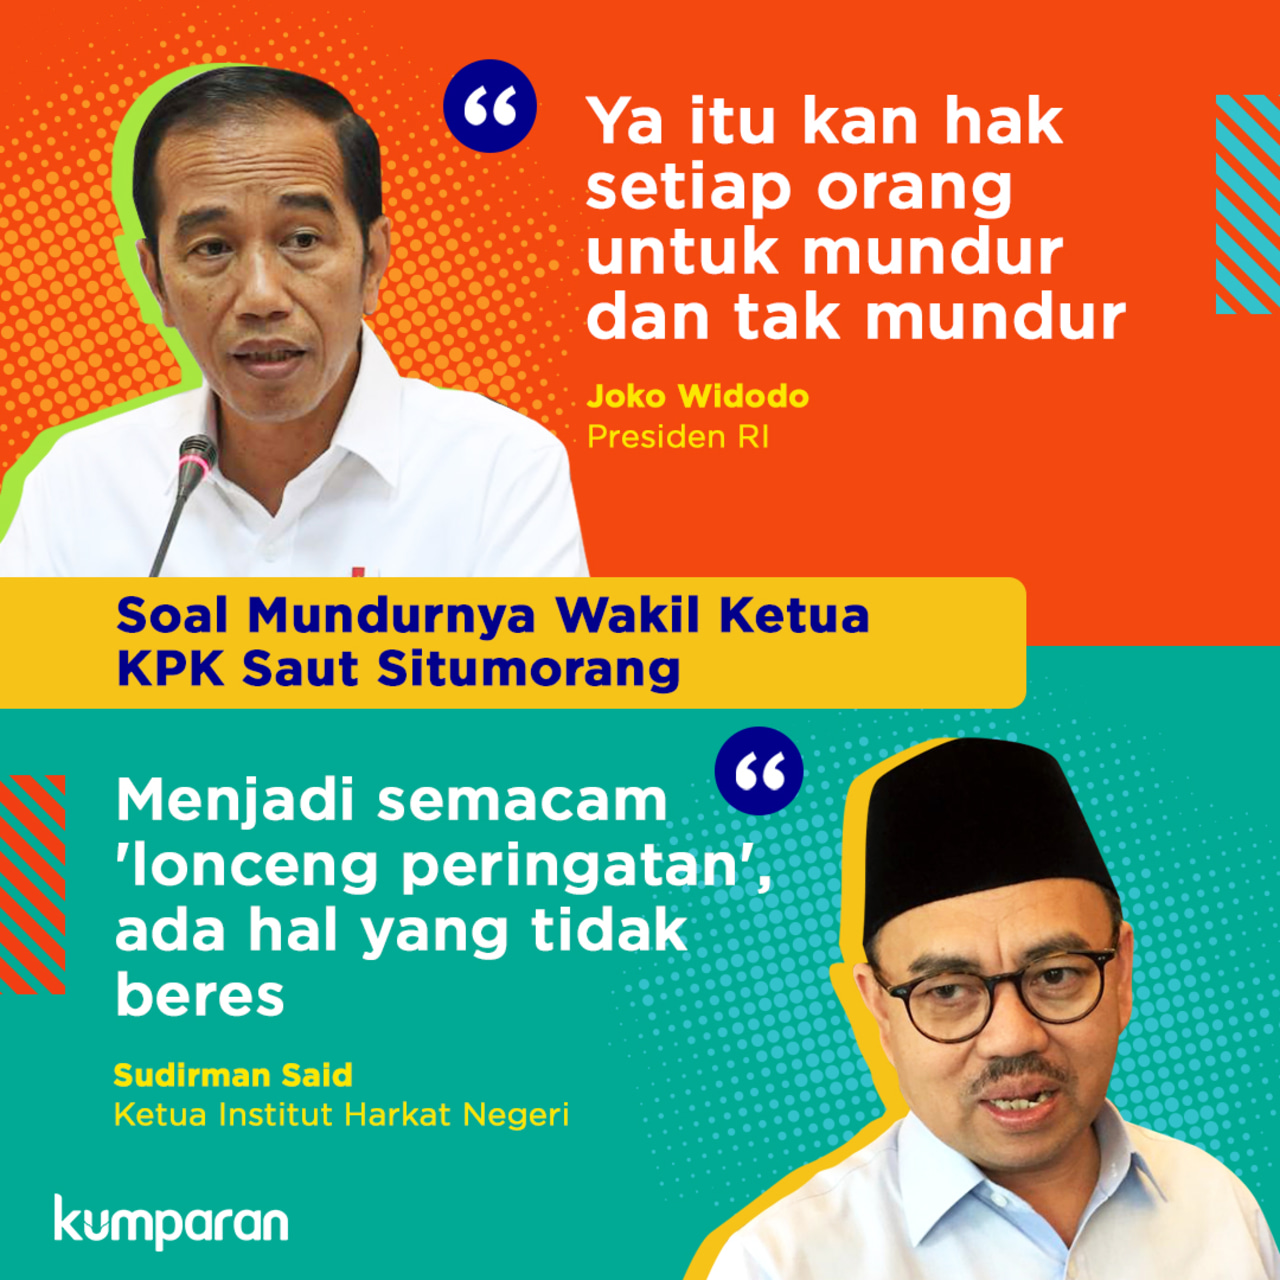 Konten Krispi, Jokowi dan Sudirman Said.